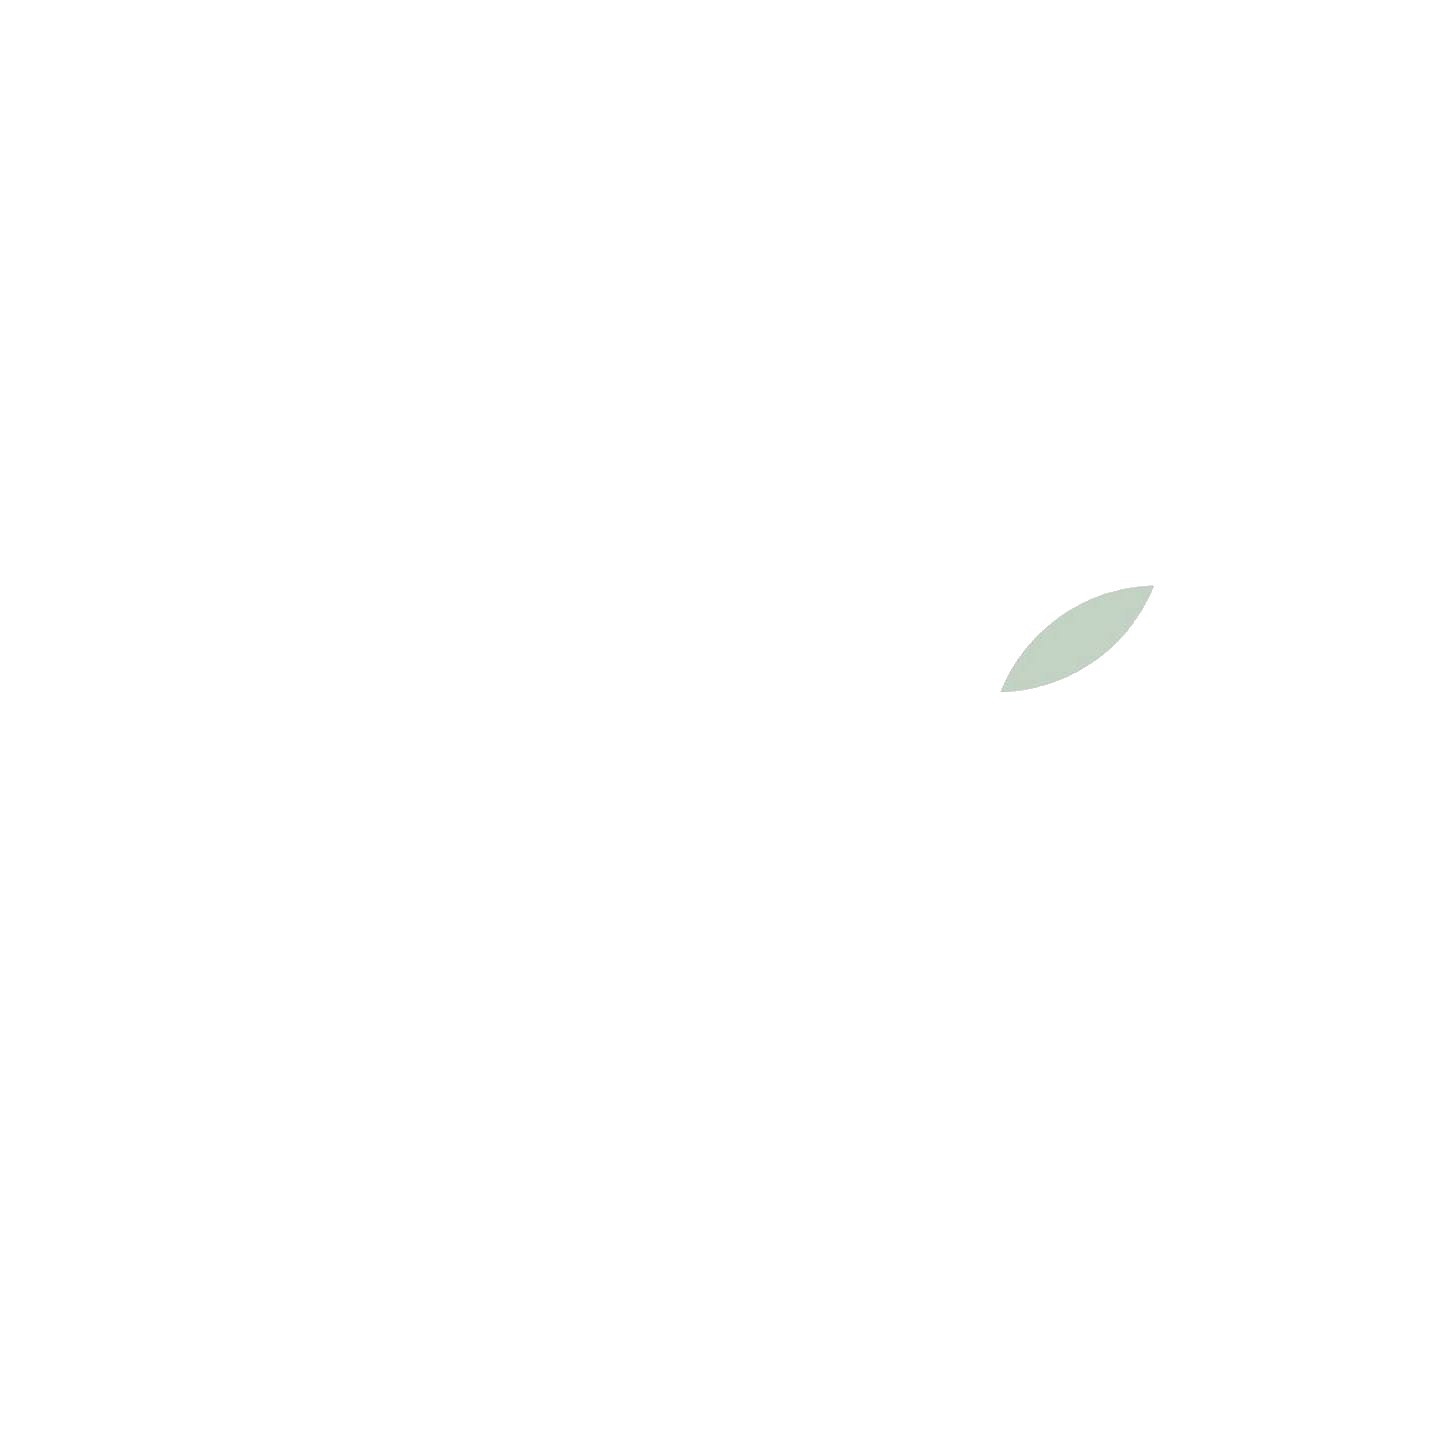 wit-logo